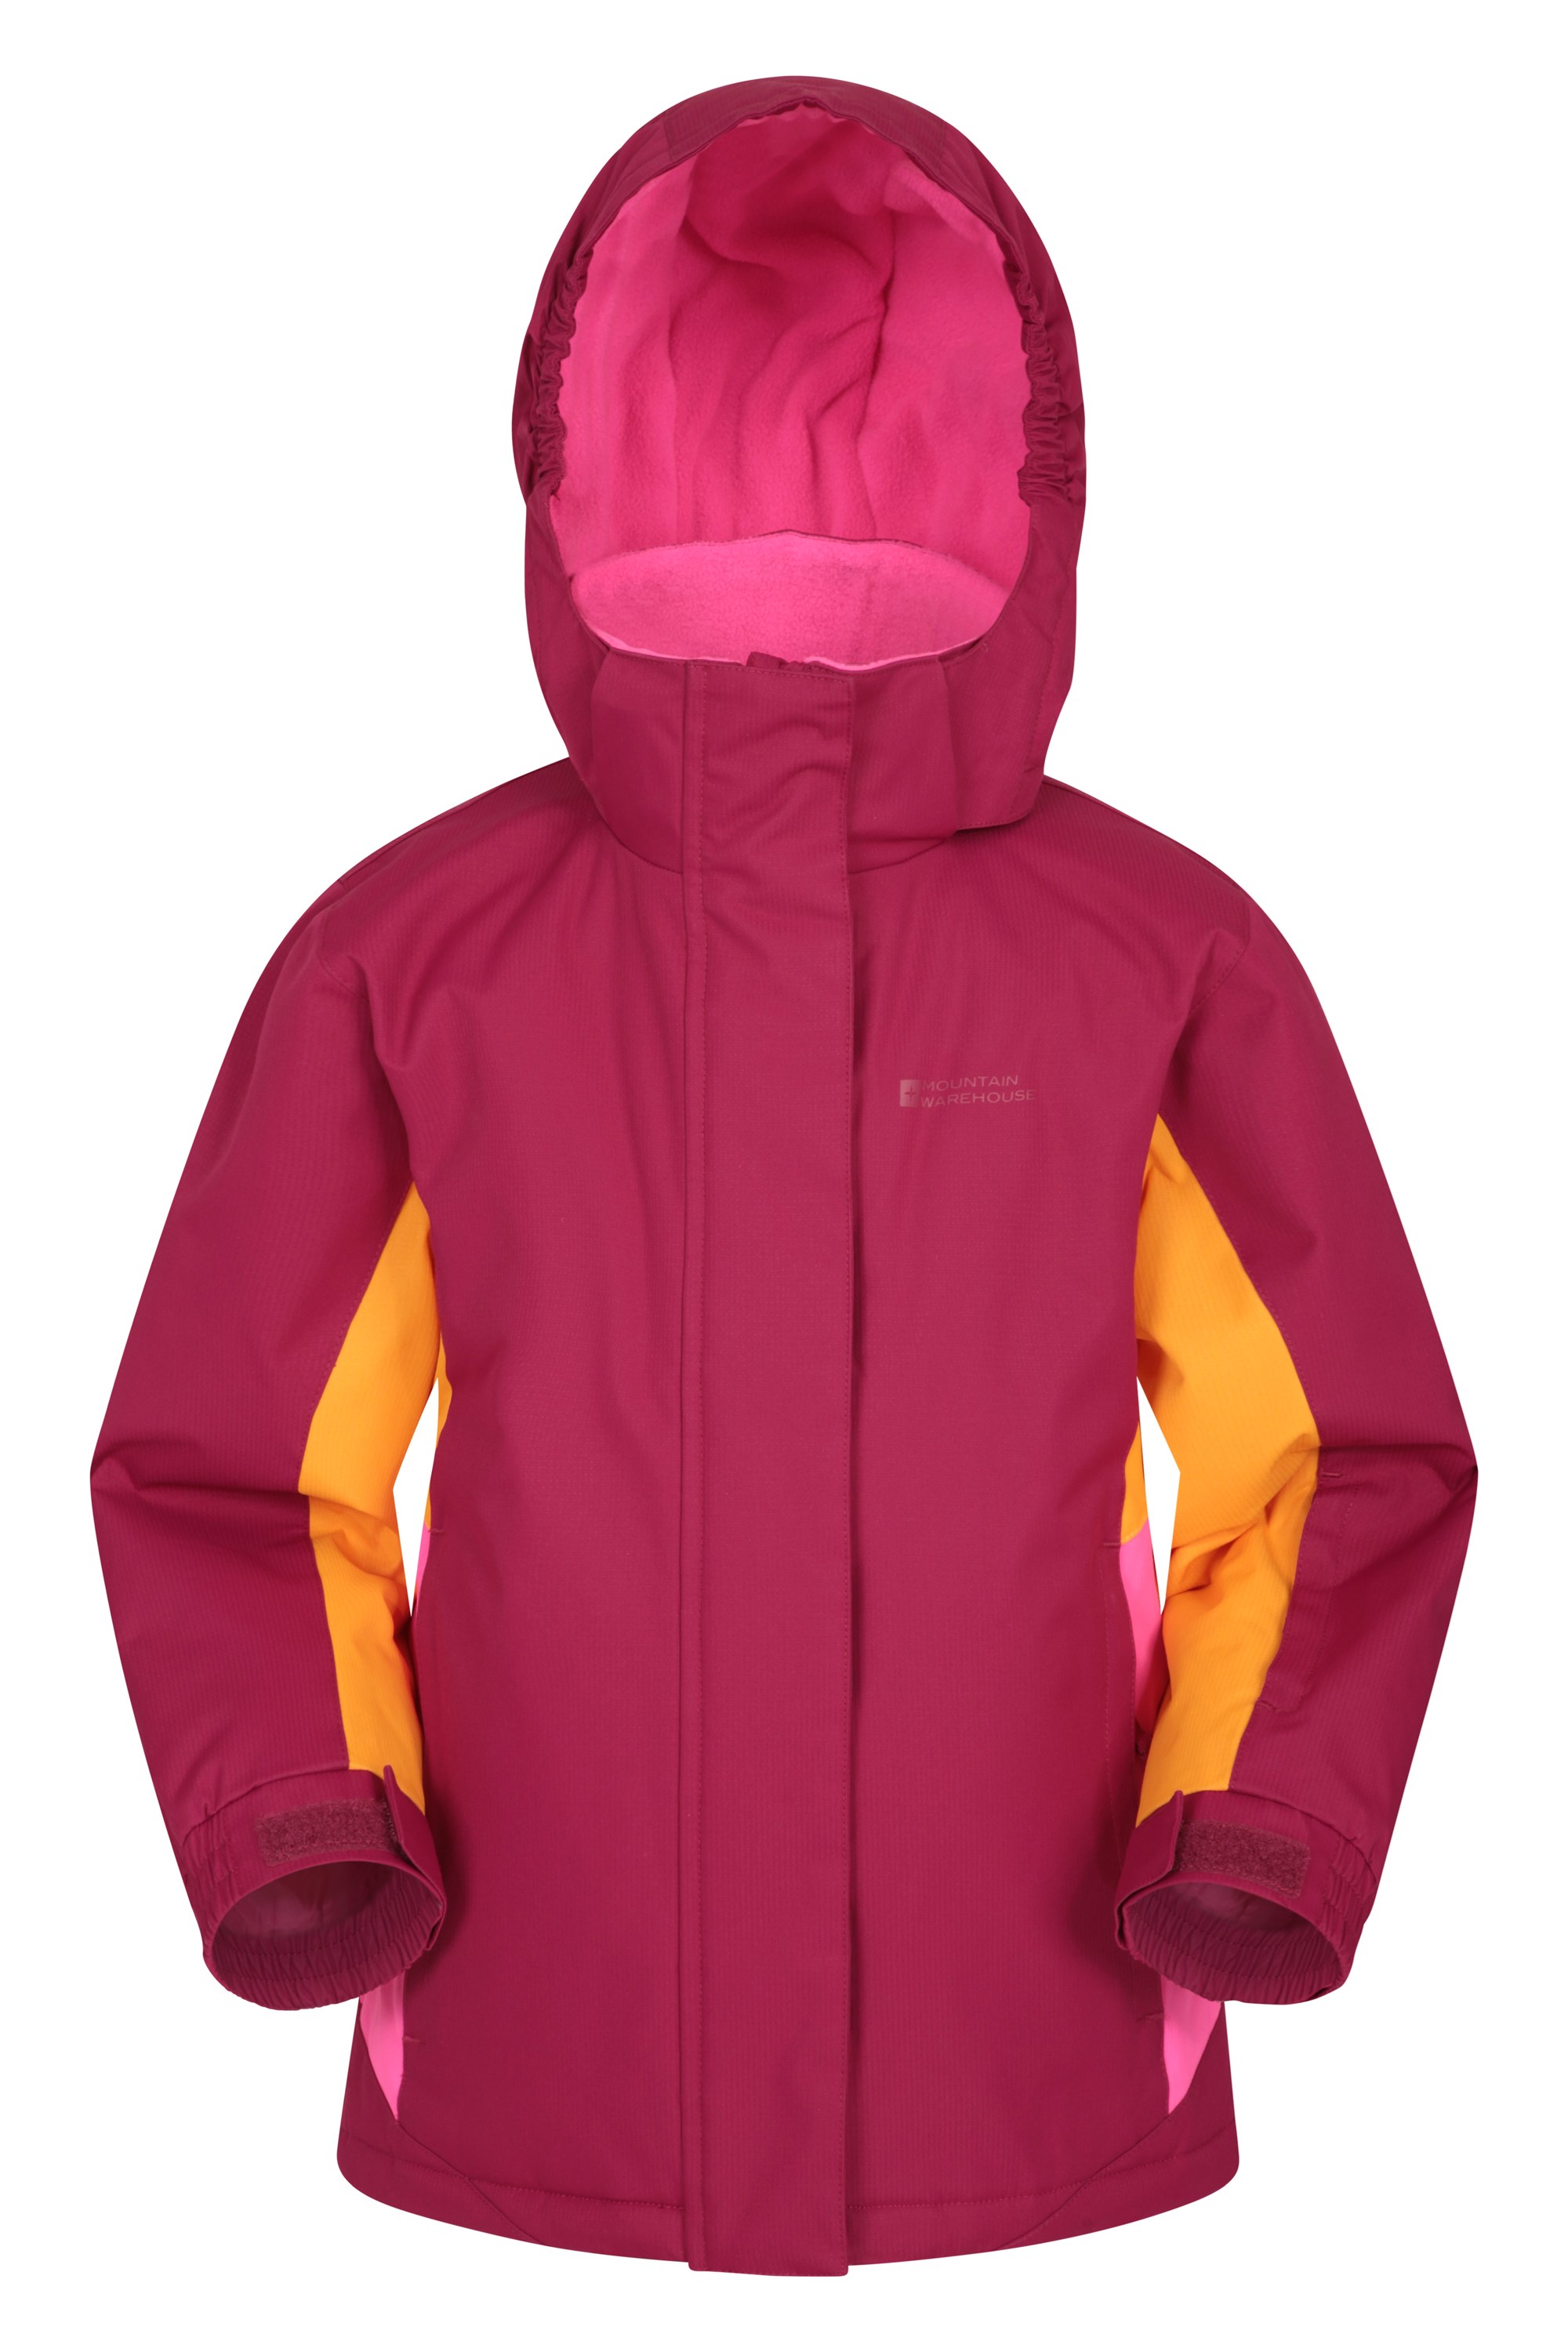 Mountain Warehouse Girls Mountain warehouse fleece lined/ hooded winter jacket/coat age 9-10 yrs 